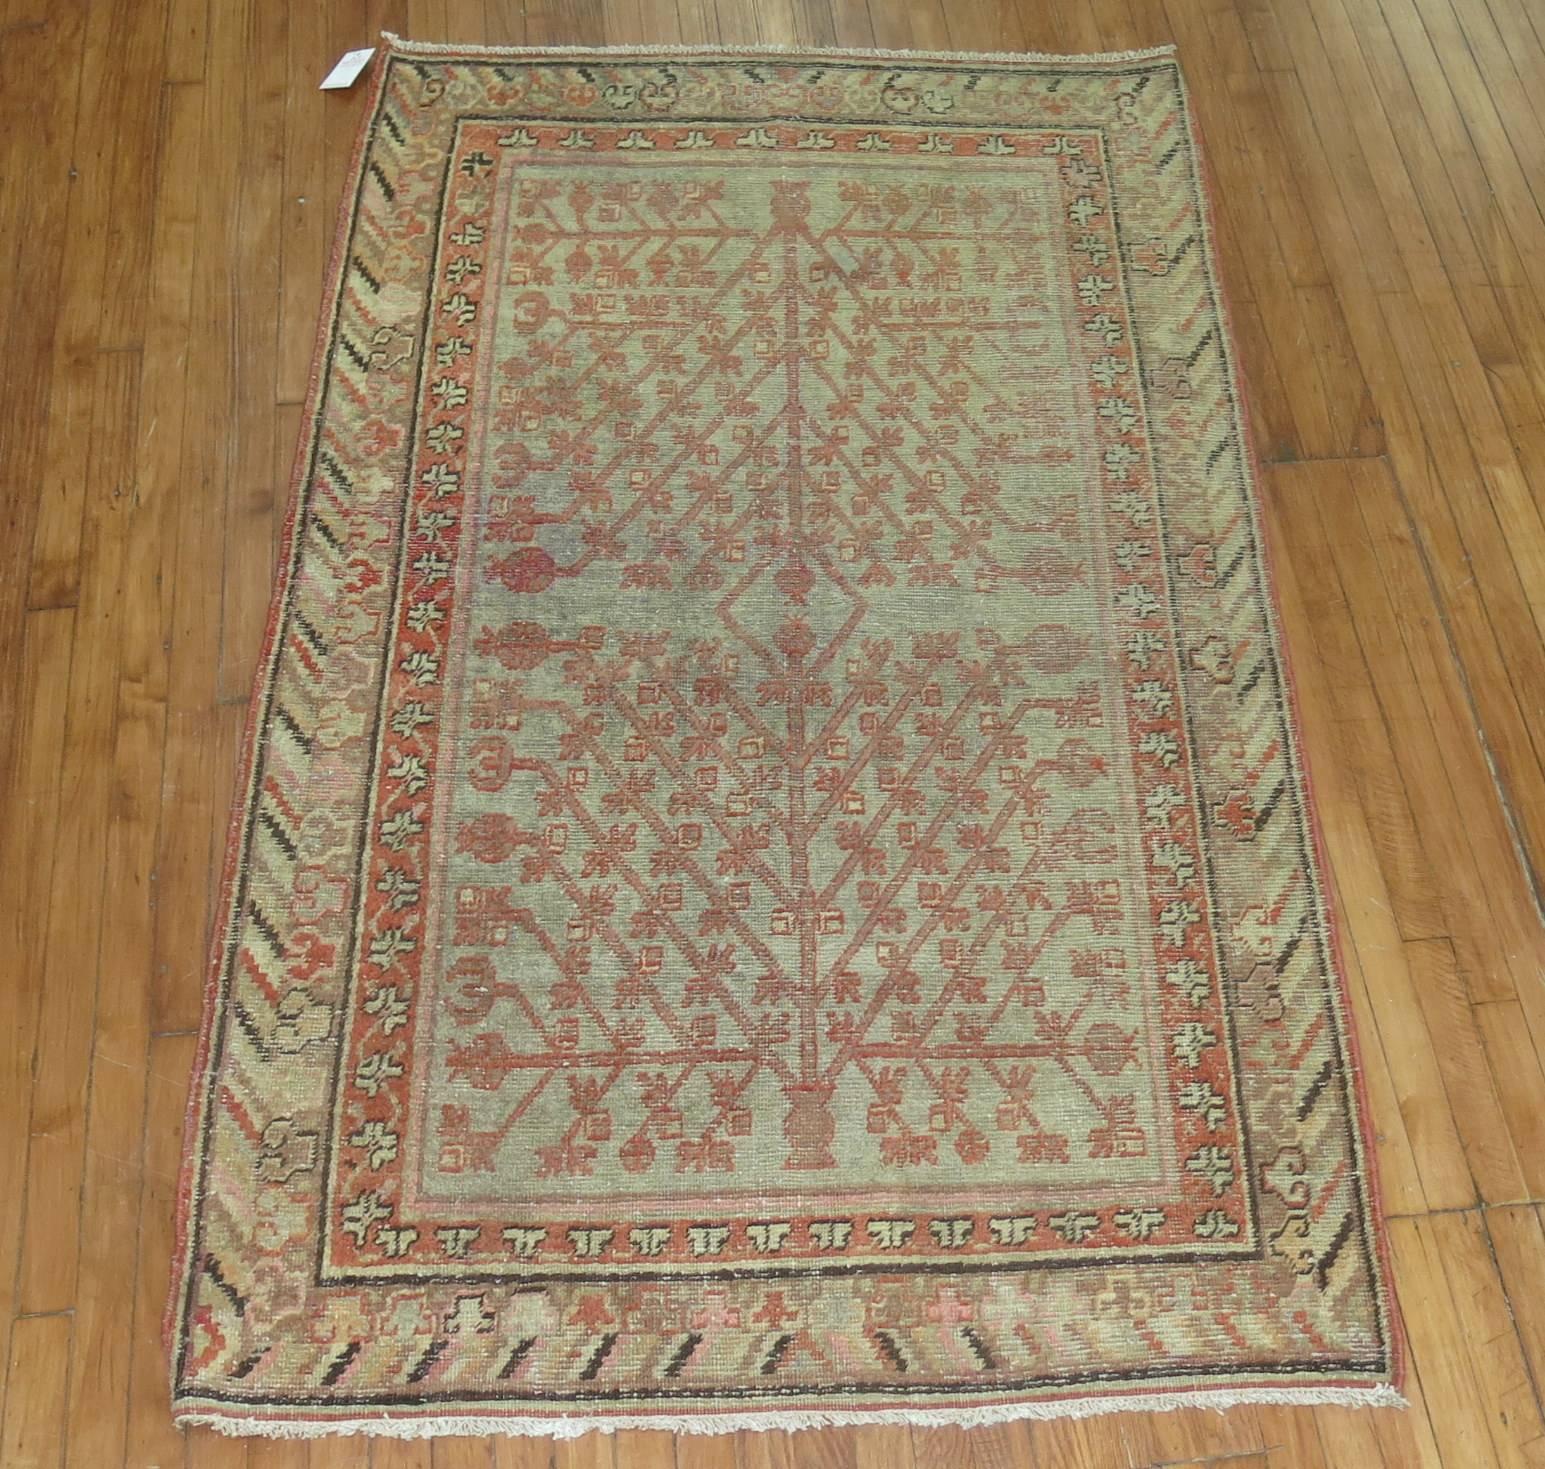 An early 20th century antique Khotan rug

4'1'' x 6'10''